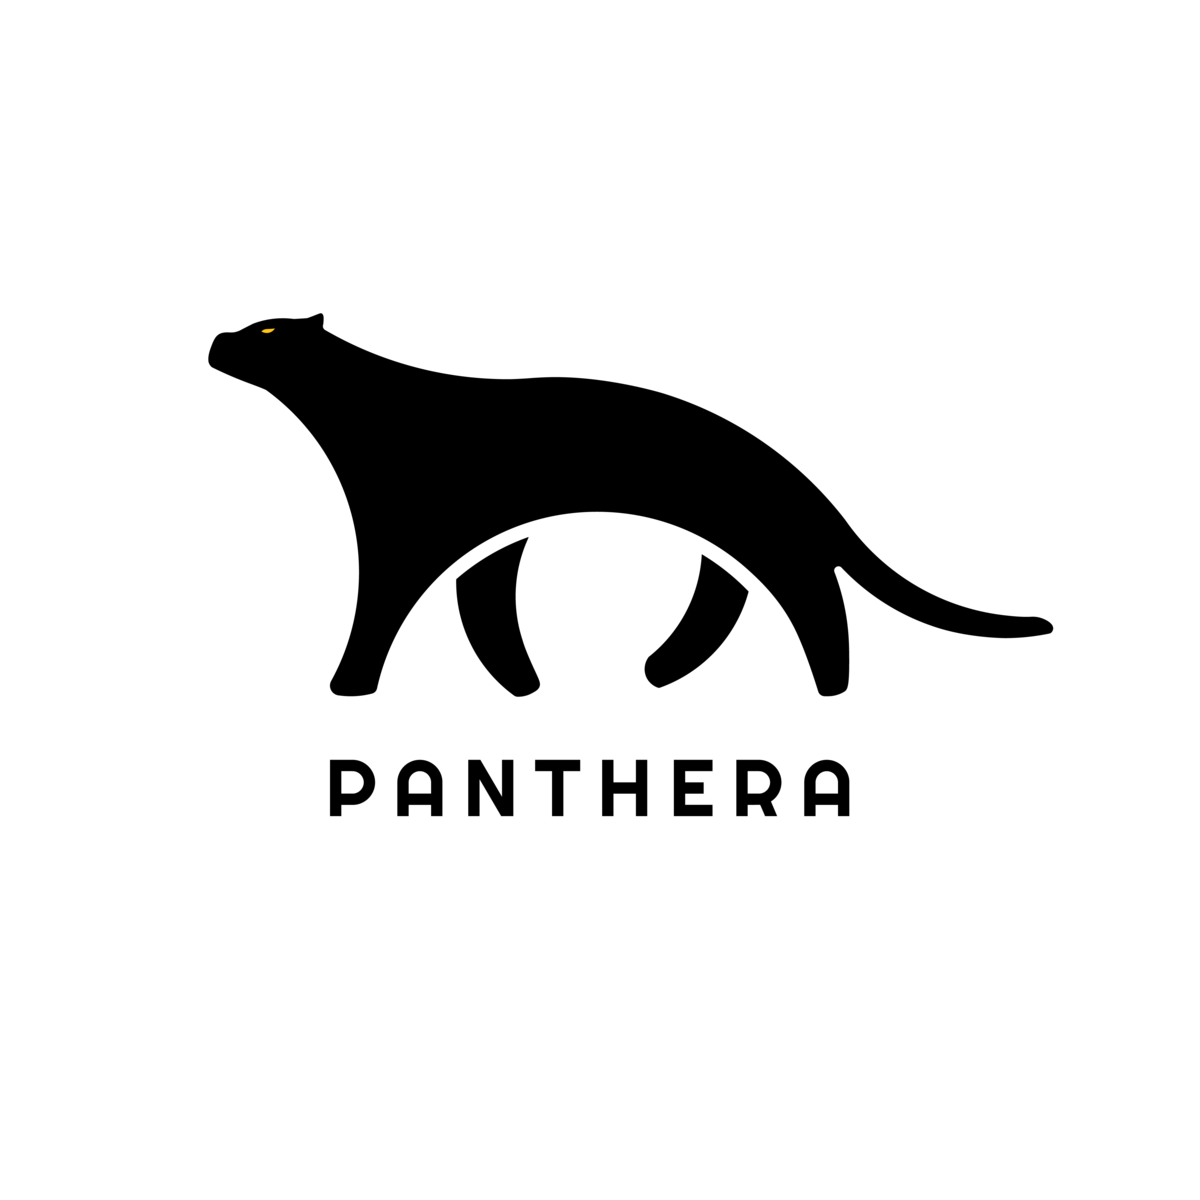 Panthera Logo By Artev Design On Dribbble